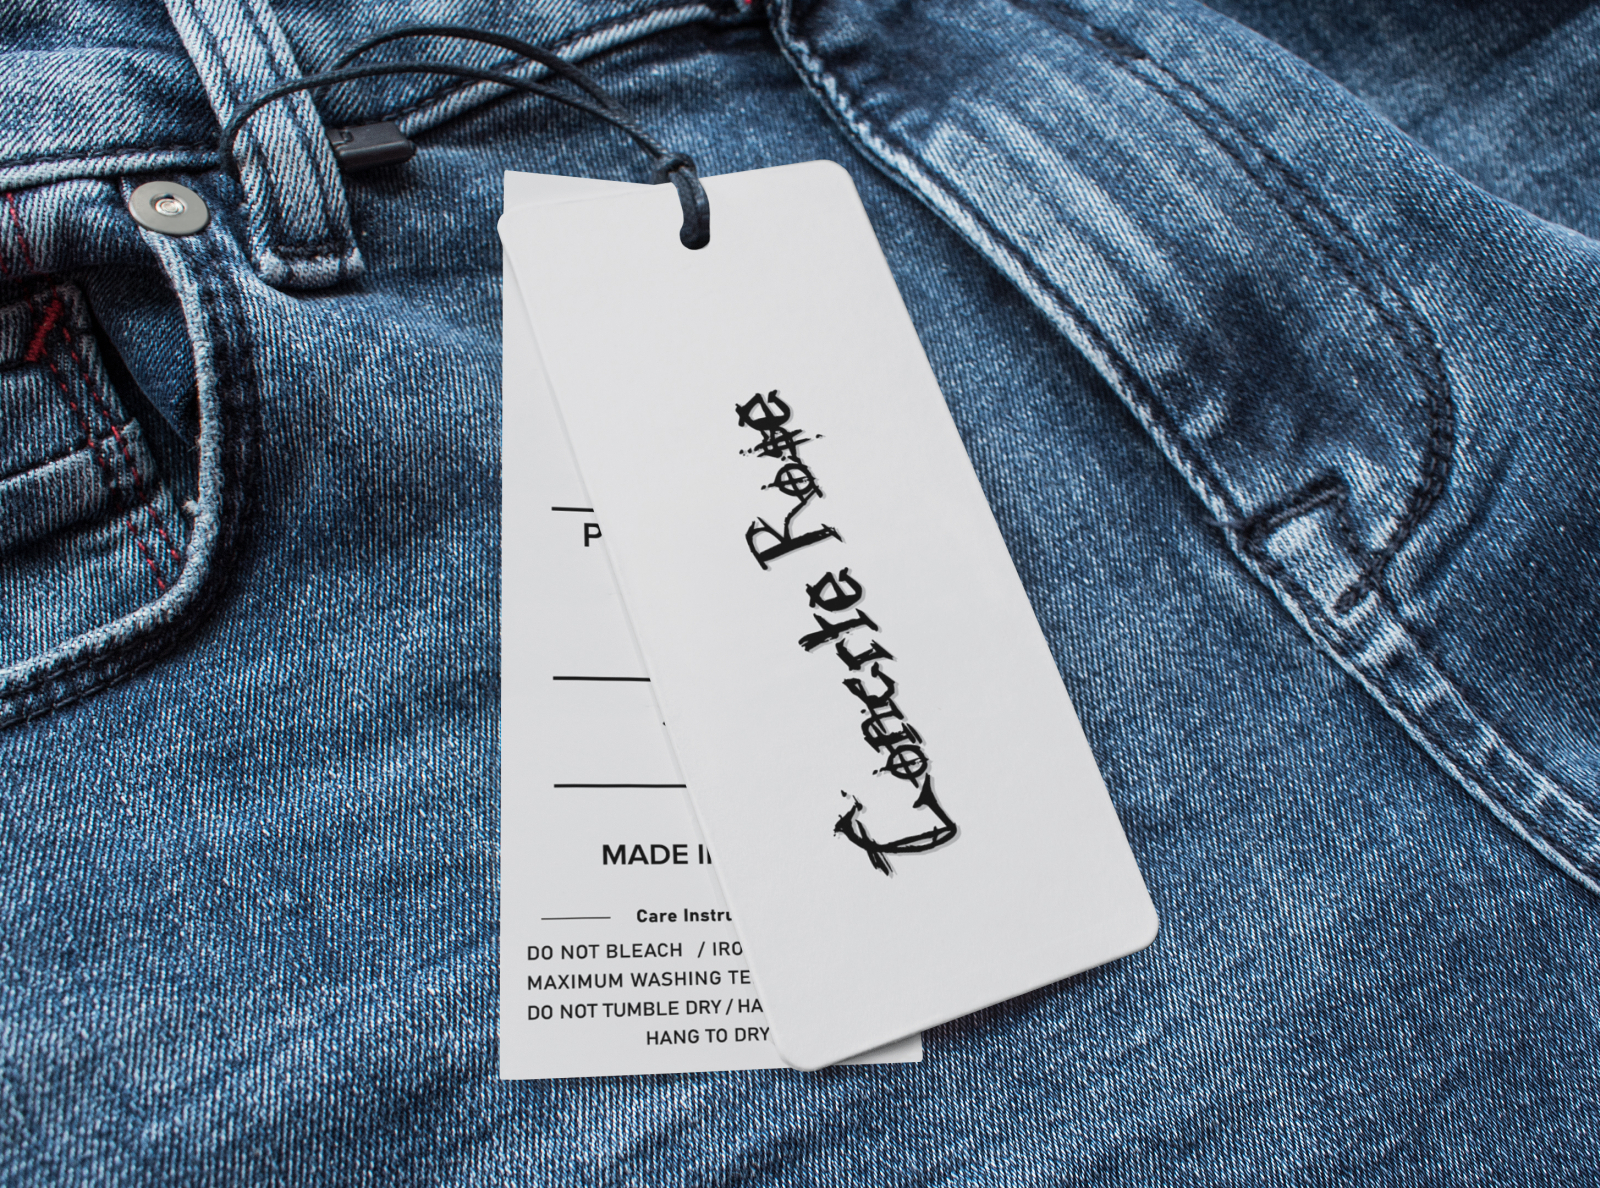 Hang tag label design by Jenny Sarkar on Dribbble